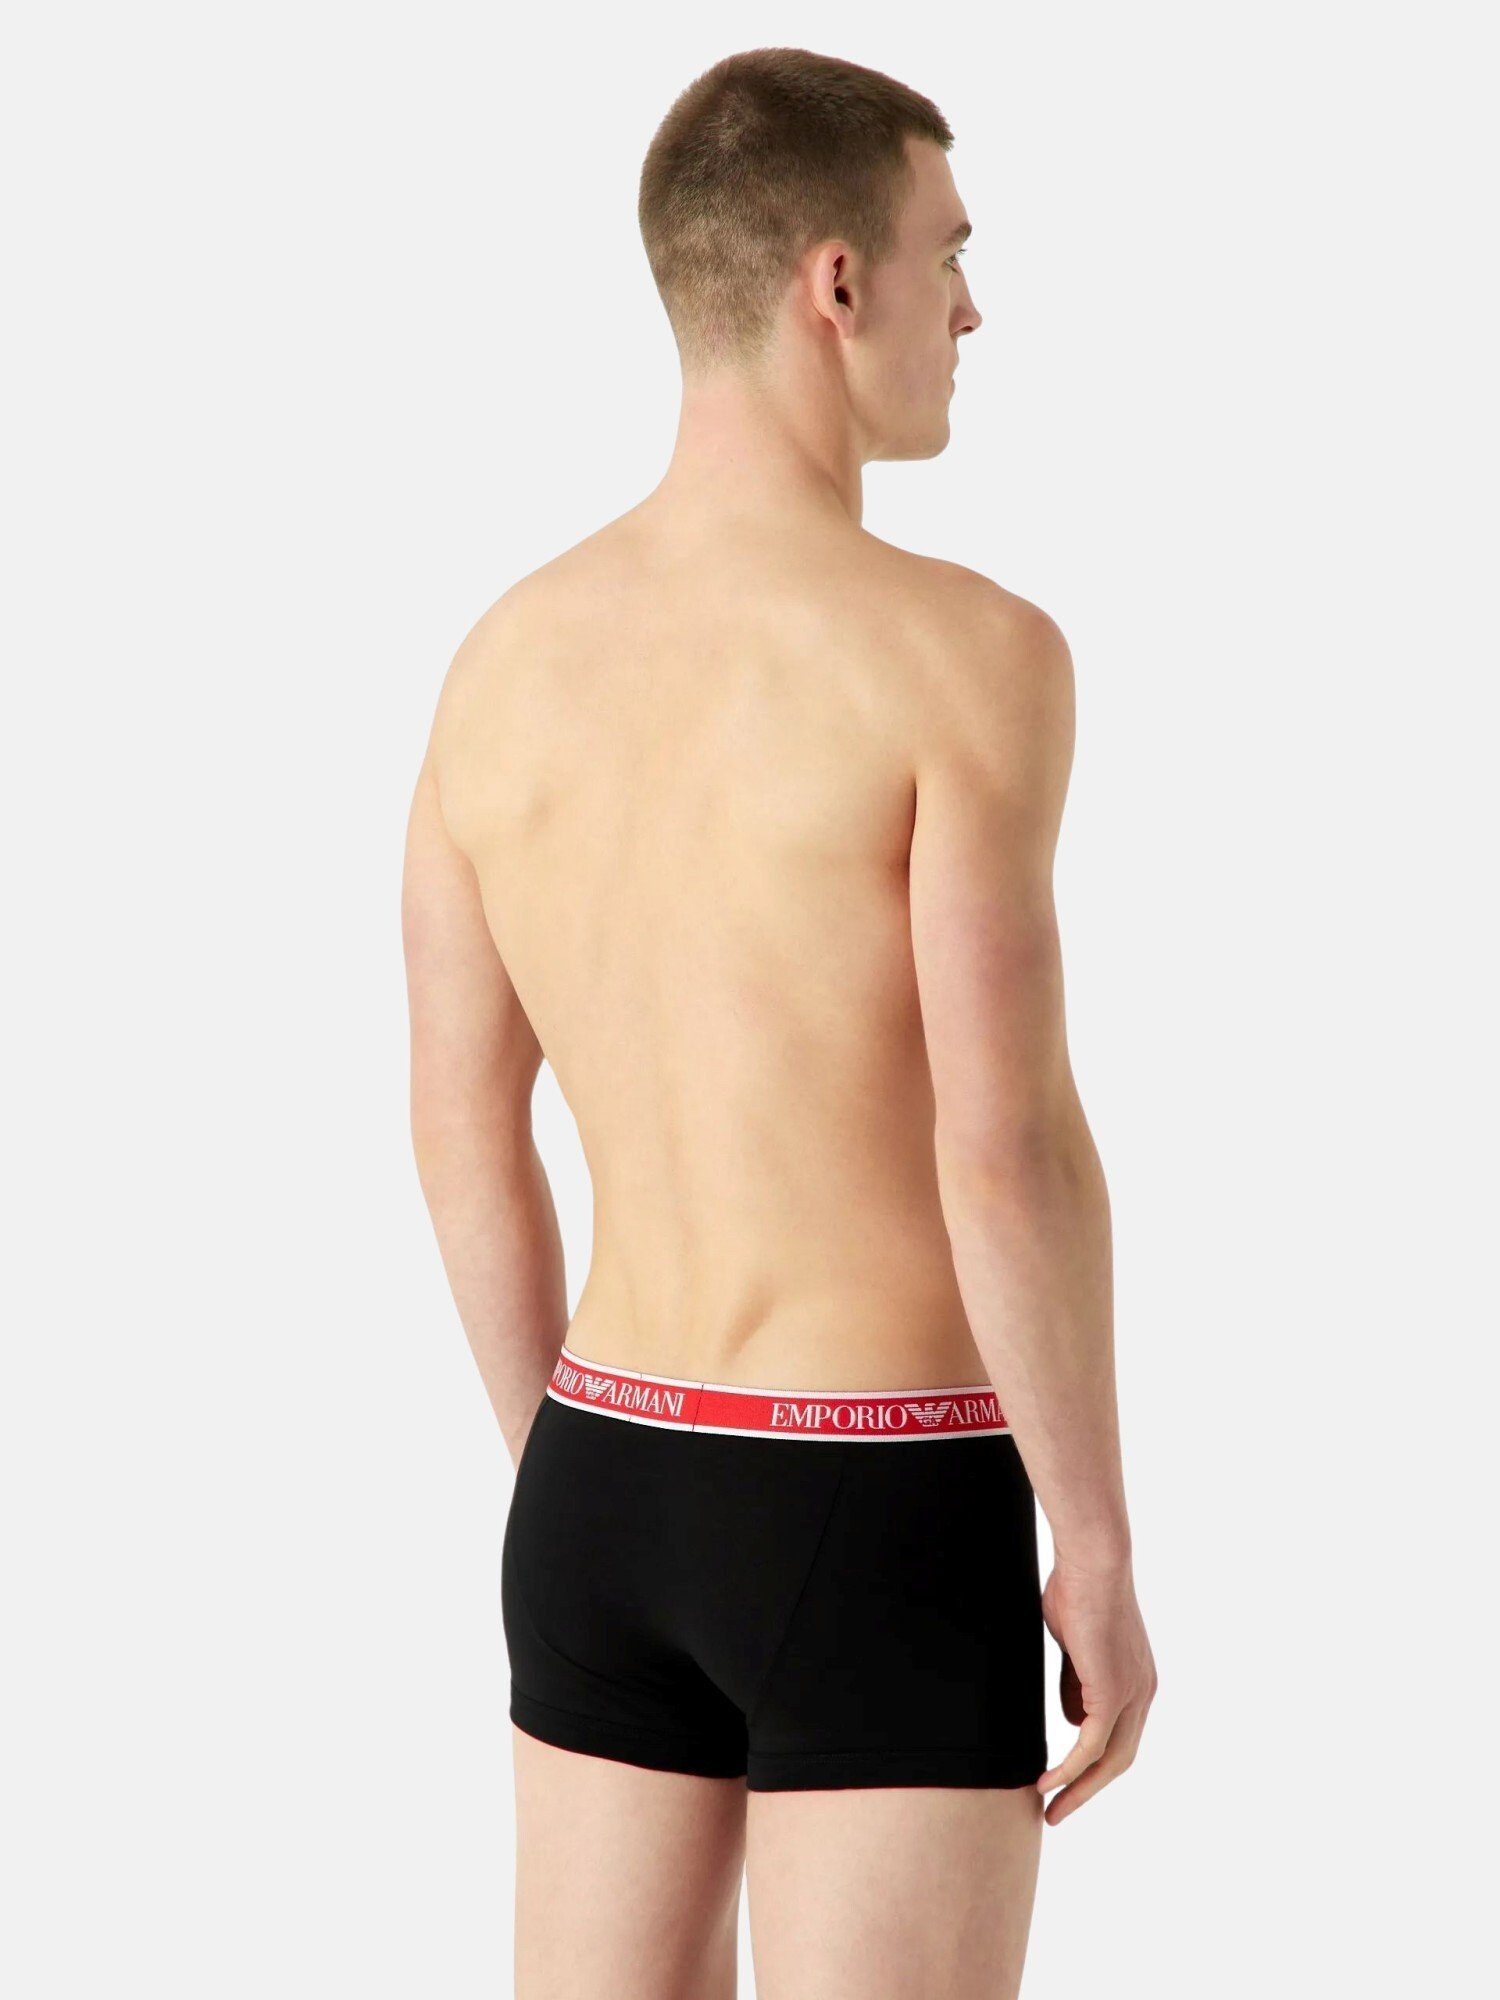 Emporio Armani Pack (3-St) Boxershorts Weiß/Schwarz/Rot 3 Trunks Knit Shorts